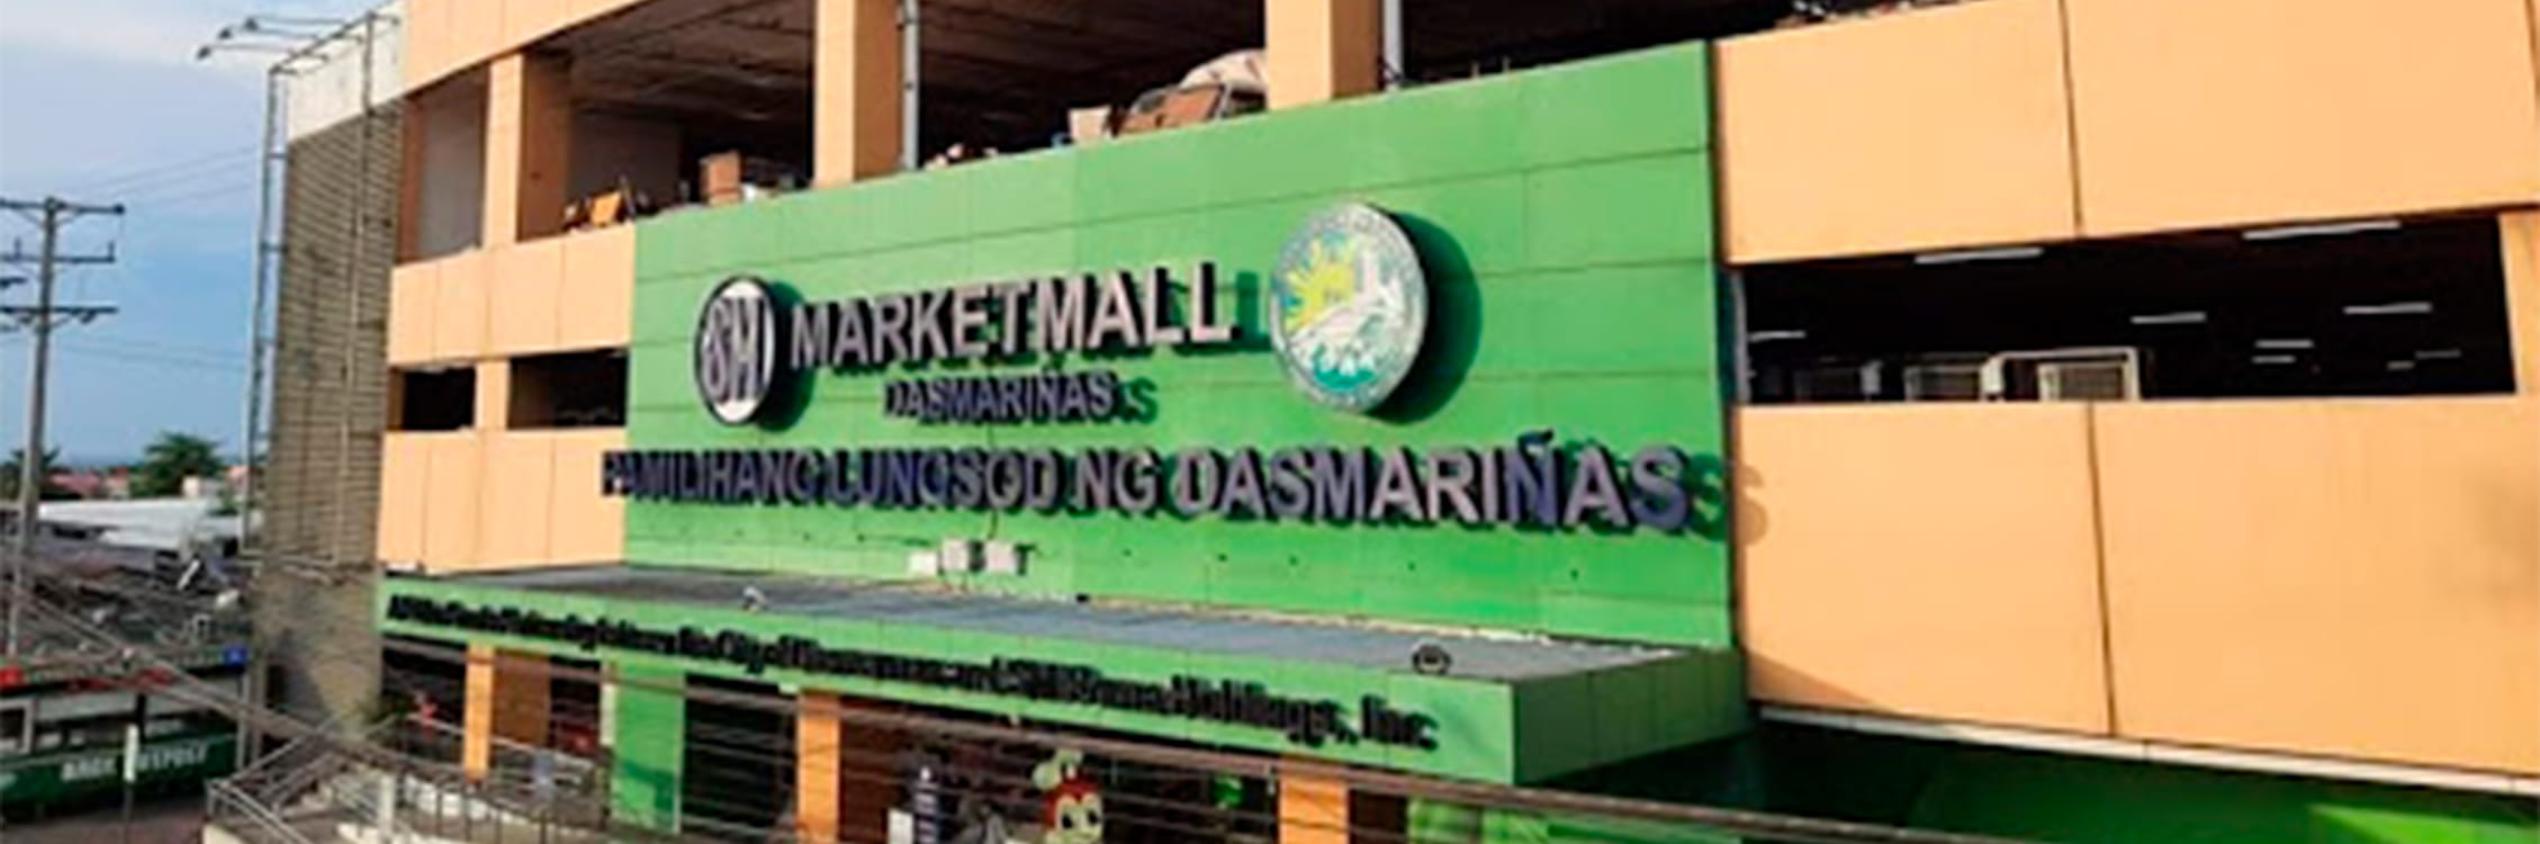 SM Marketmall Dasmarinas